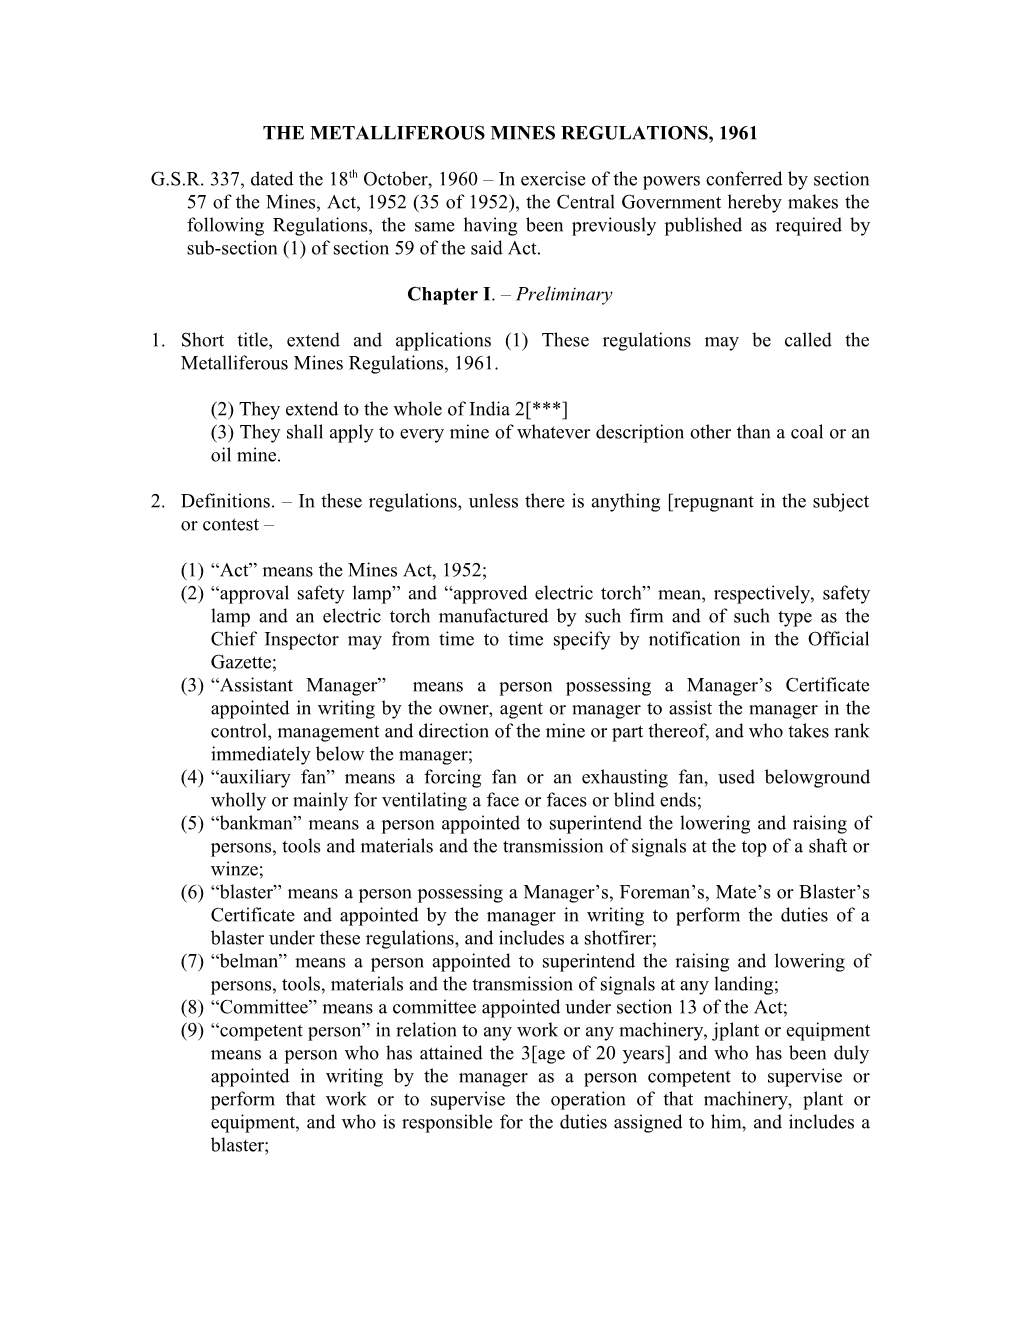 The Metalliferous Mines Regulations, 1961